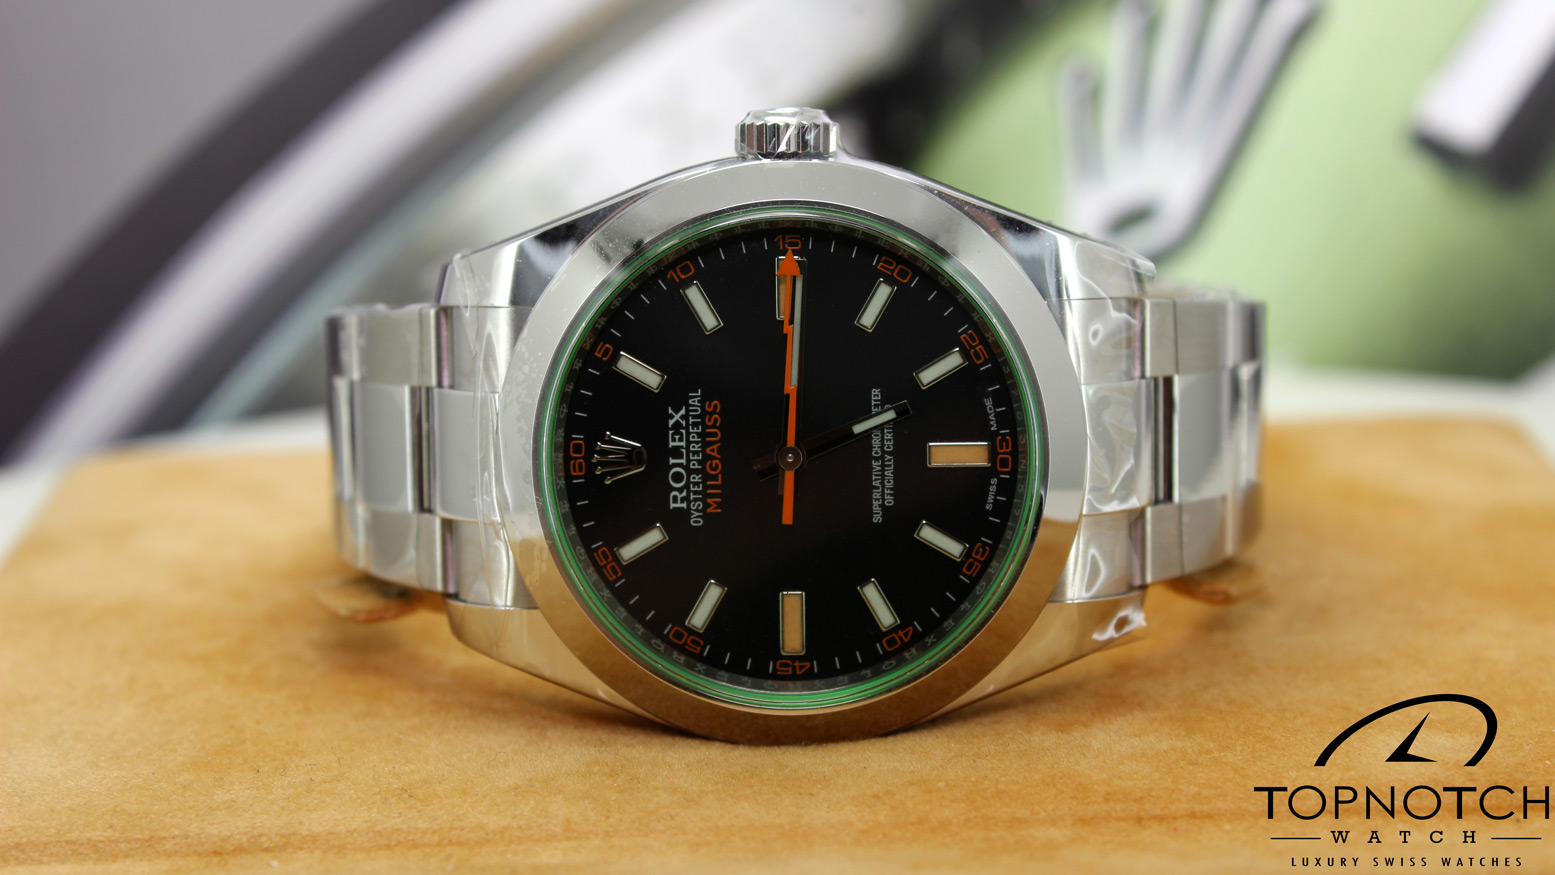 The Rolex Milgauss carried by TopNotch Watch